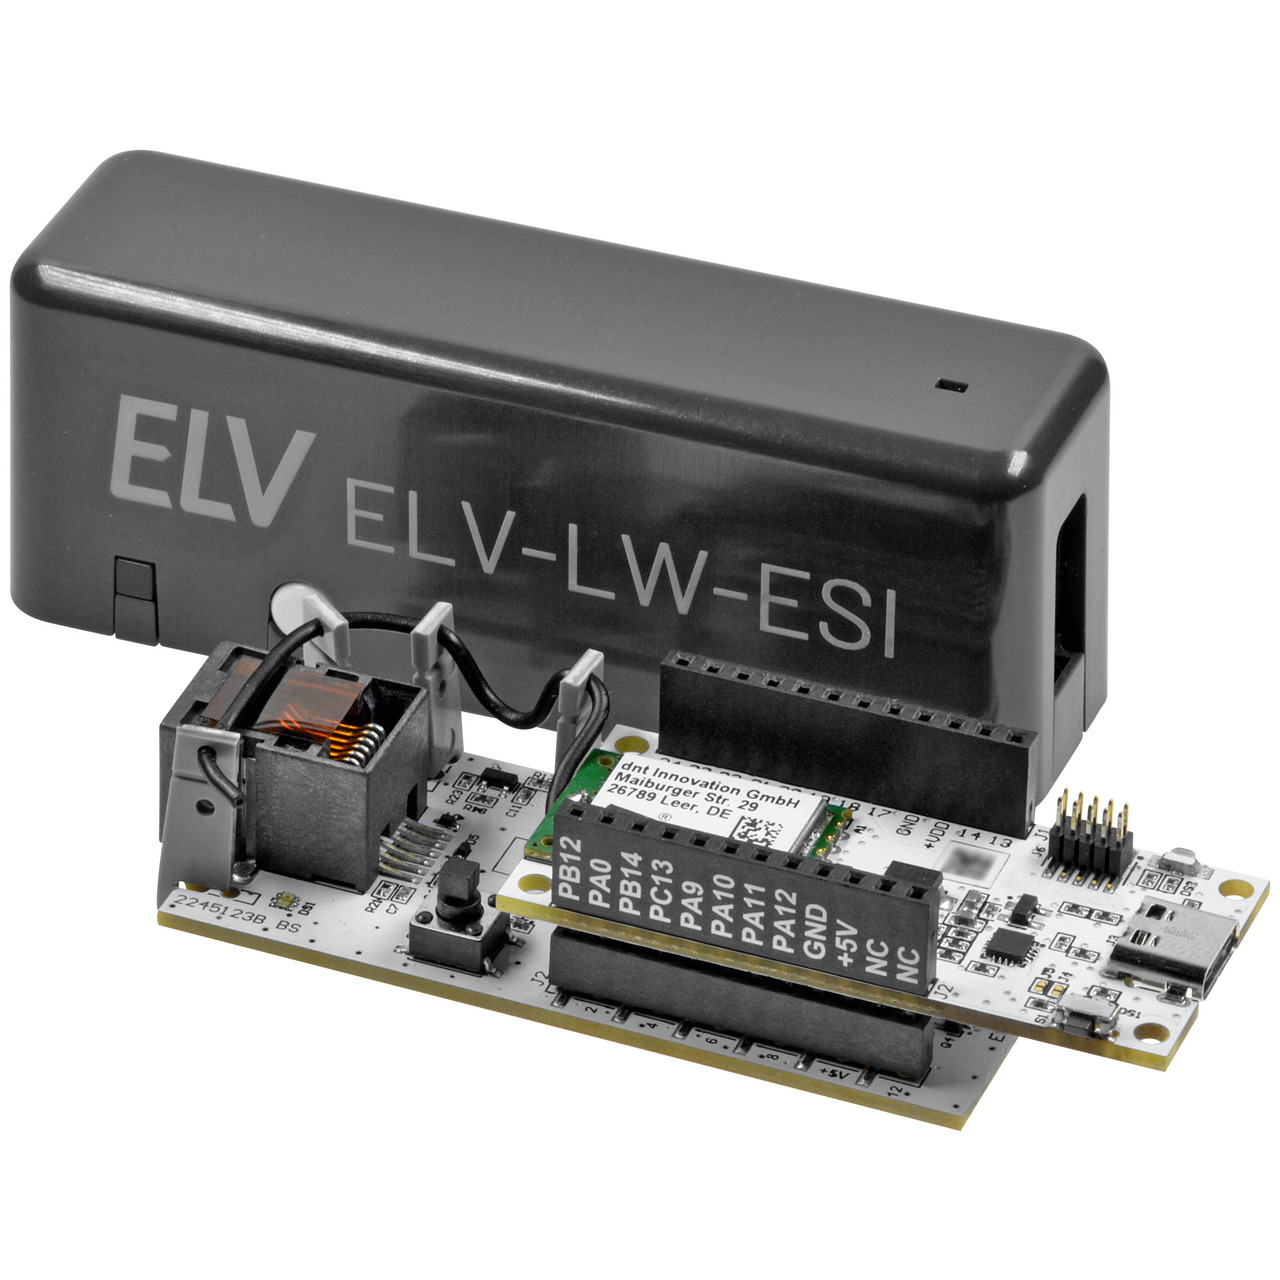 ELV Bausatz LoRaWAN Energiezähler-Sensorschnittstelle- ELV-LW-ESI unter Bausätze